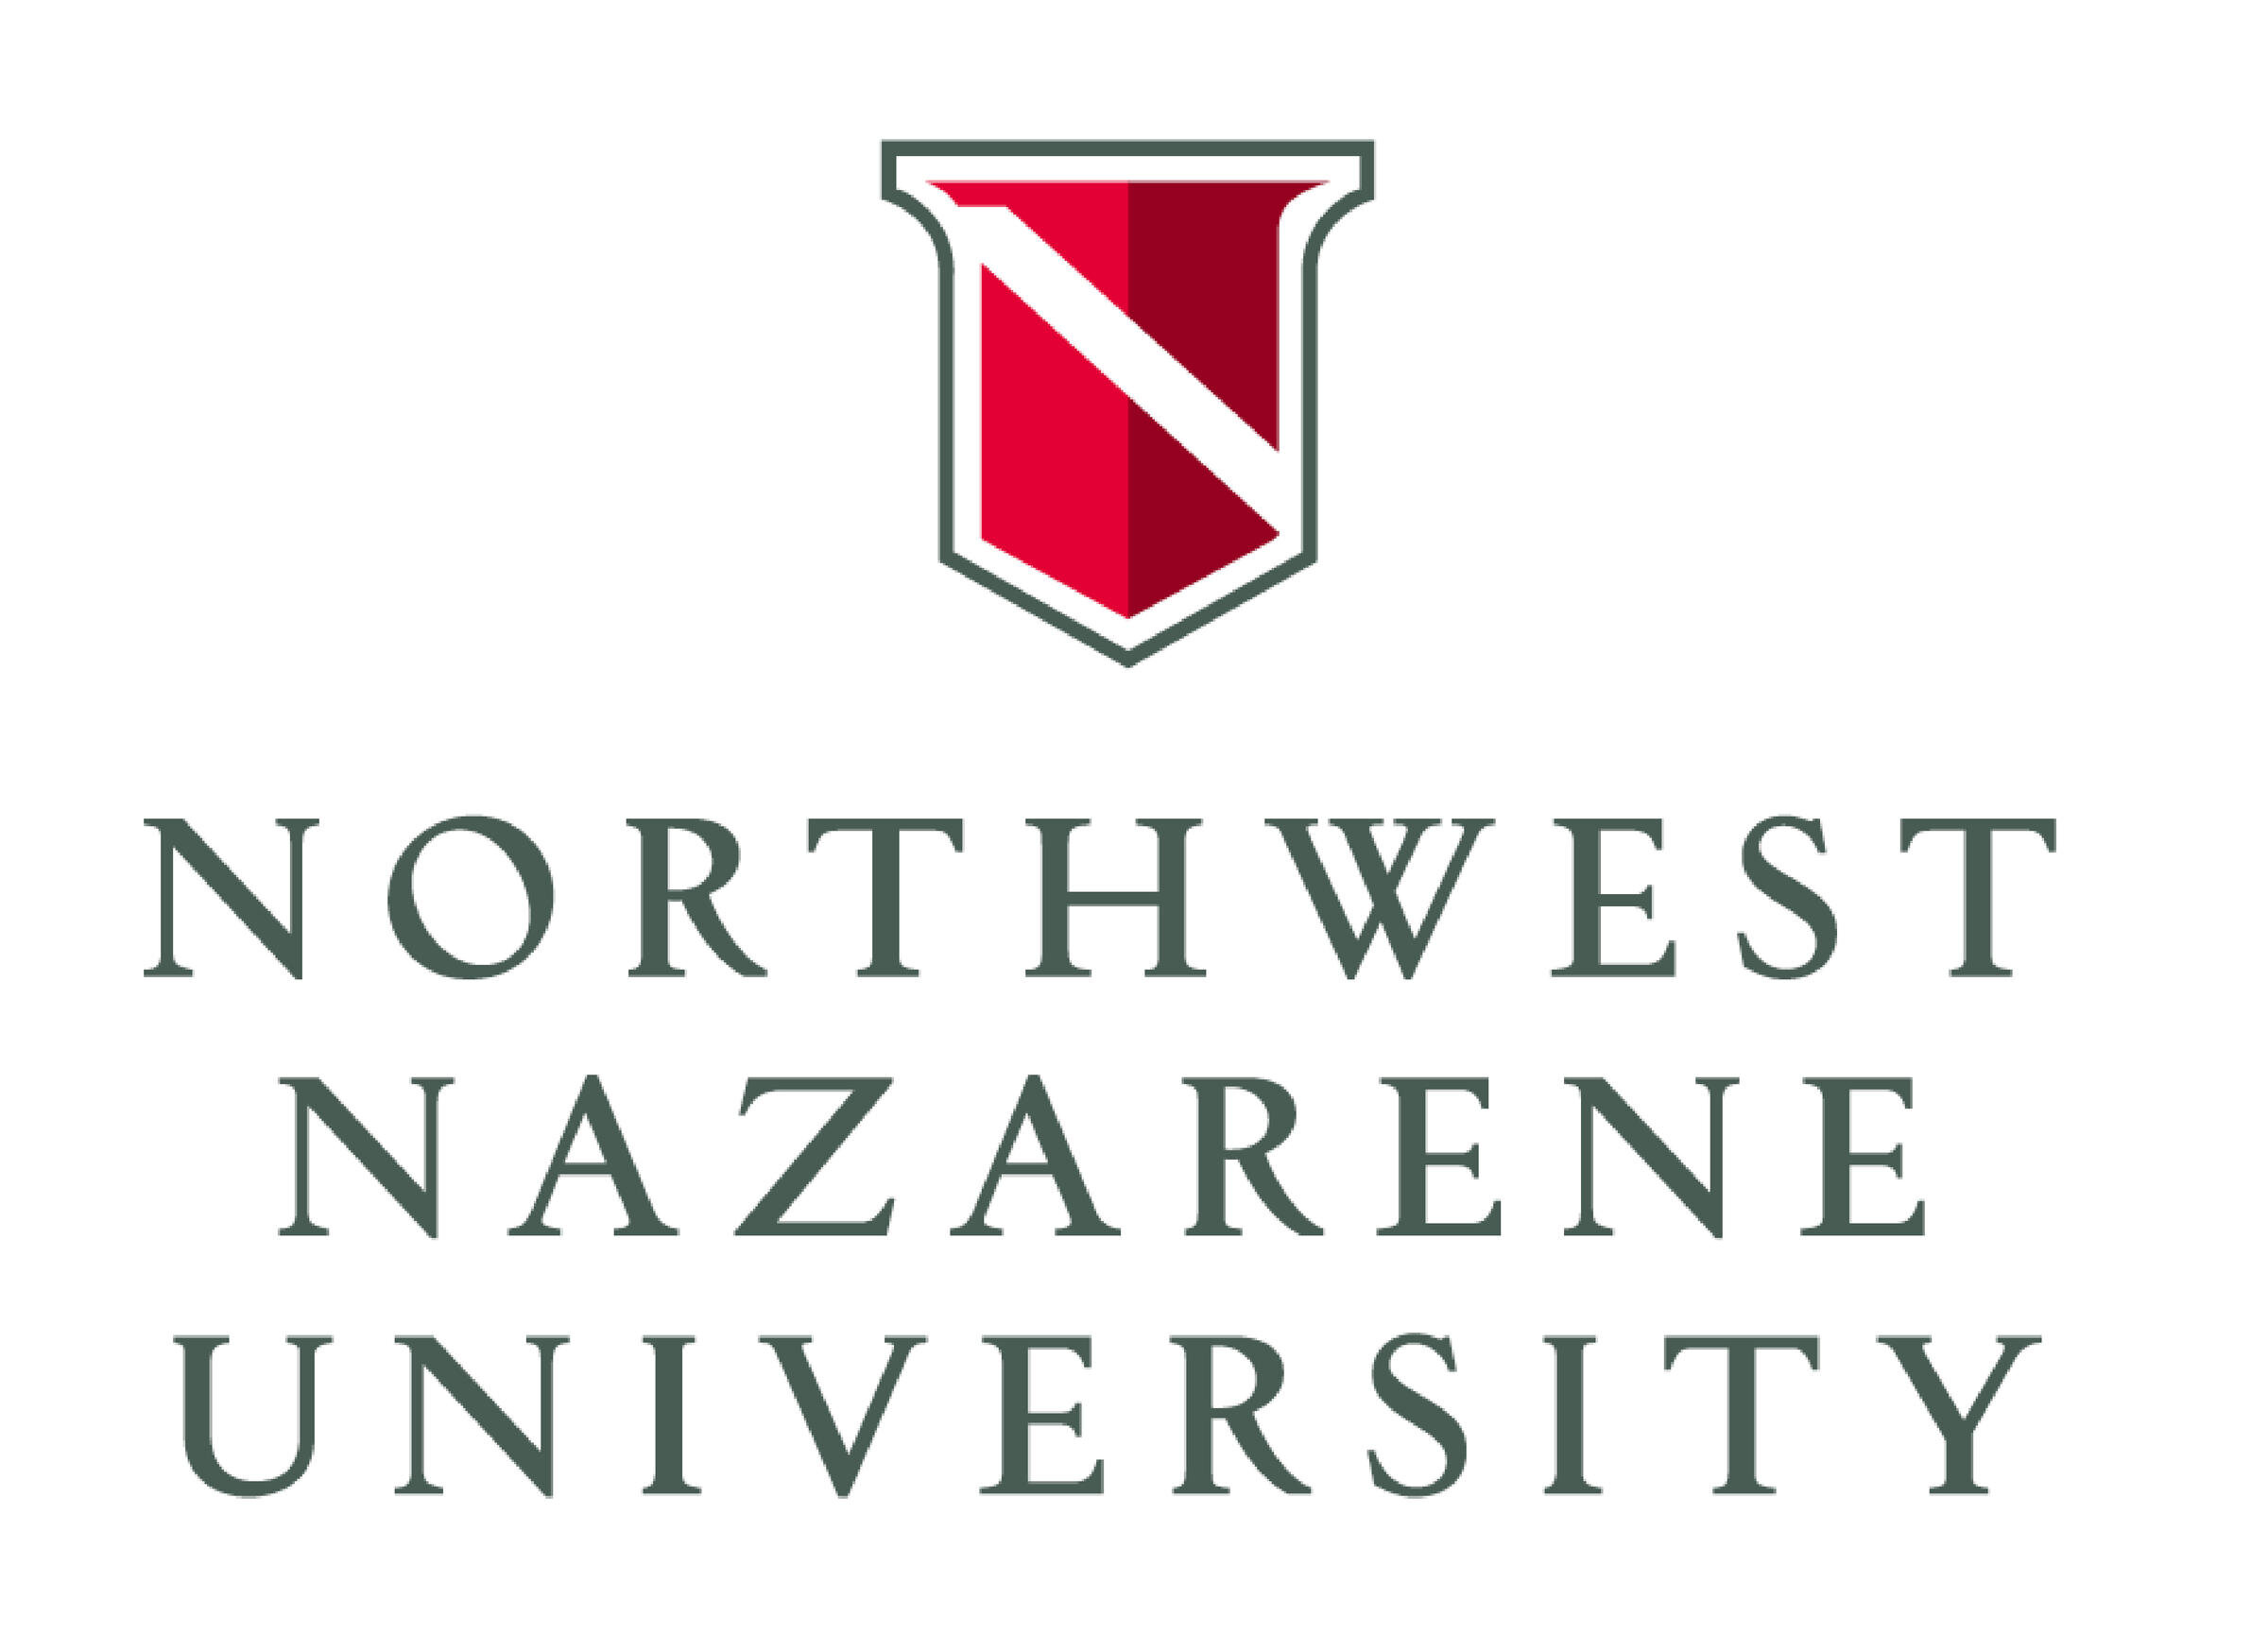 Northwest Nazarene University. Korea Nazarene University. Nordic International University logo. Zero university